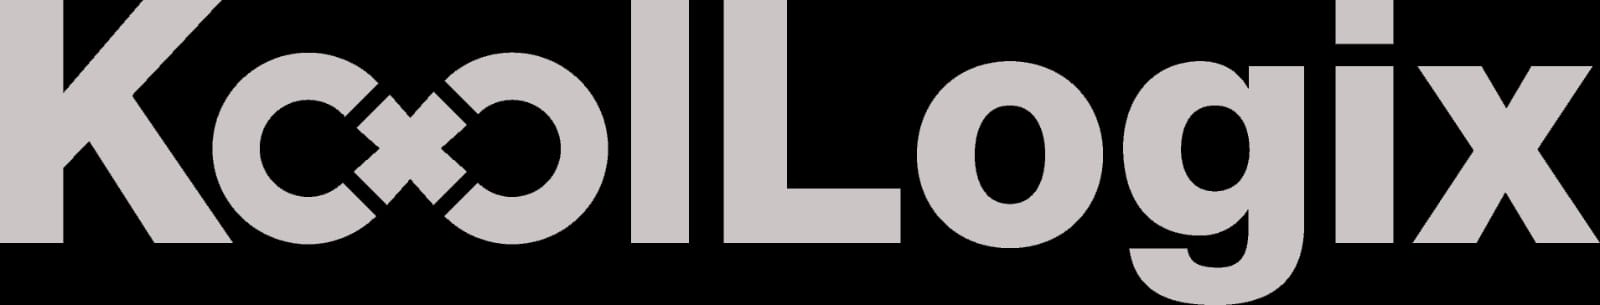 Koollogix Pte. Ltd. company logo